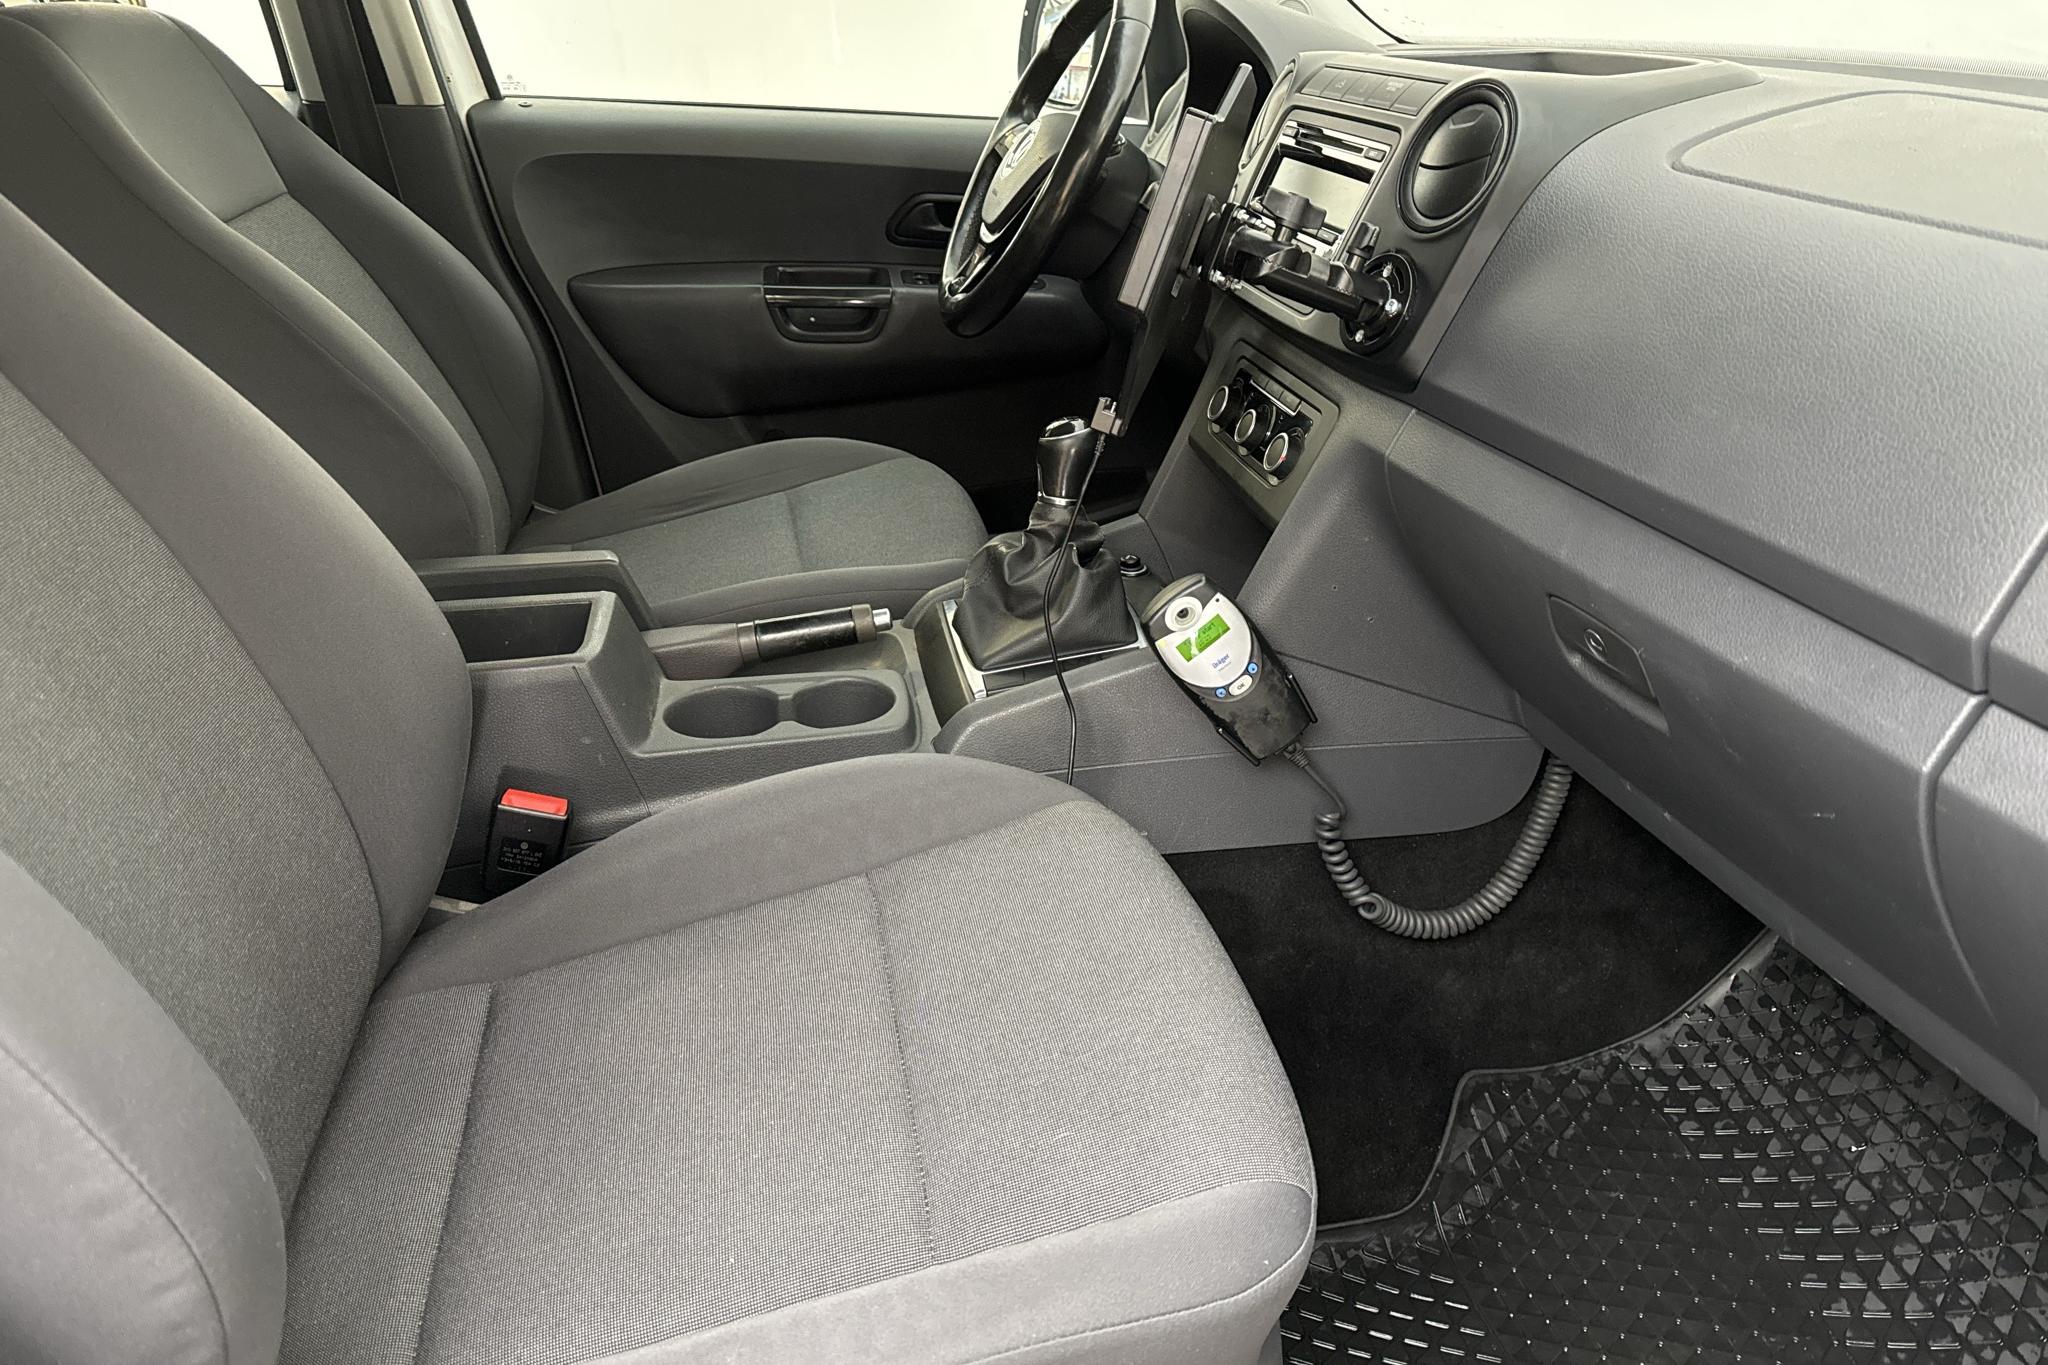 VW Amarok 2.0 TDI 4motion (140hk) - 4 342 mil - Manuell - vit - 2016